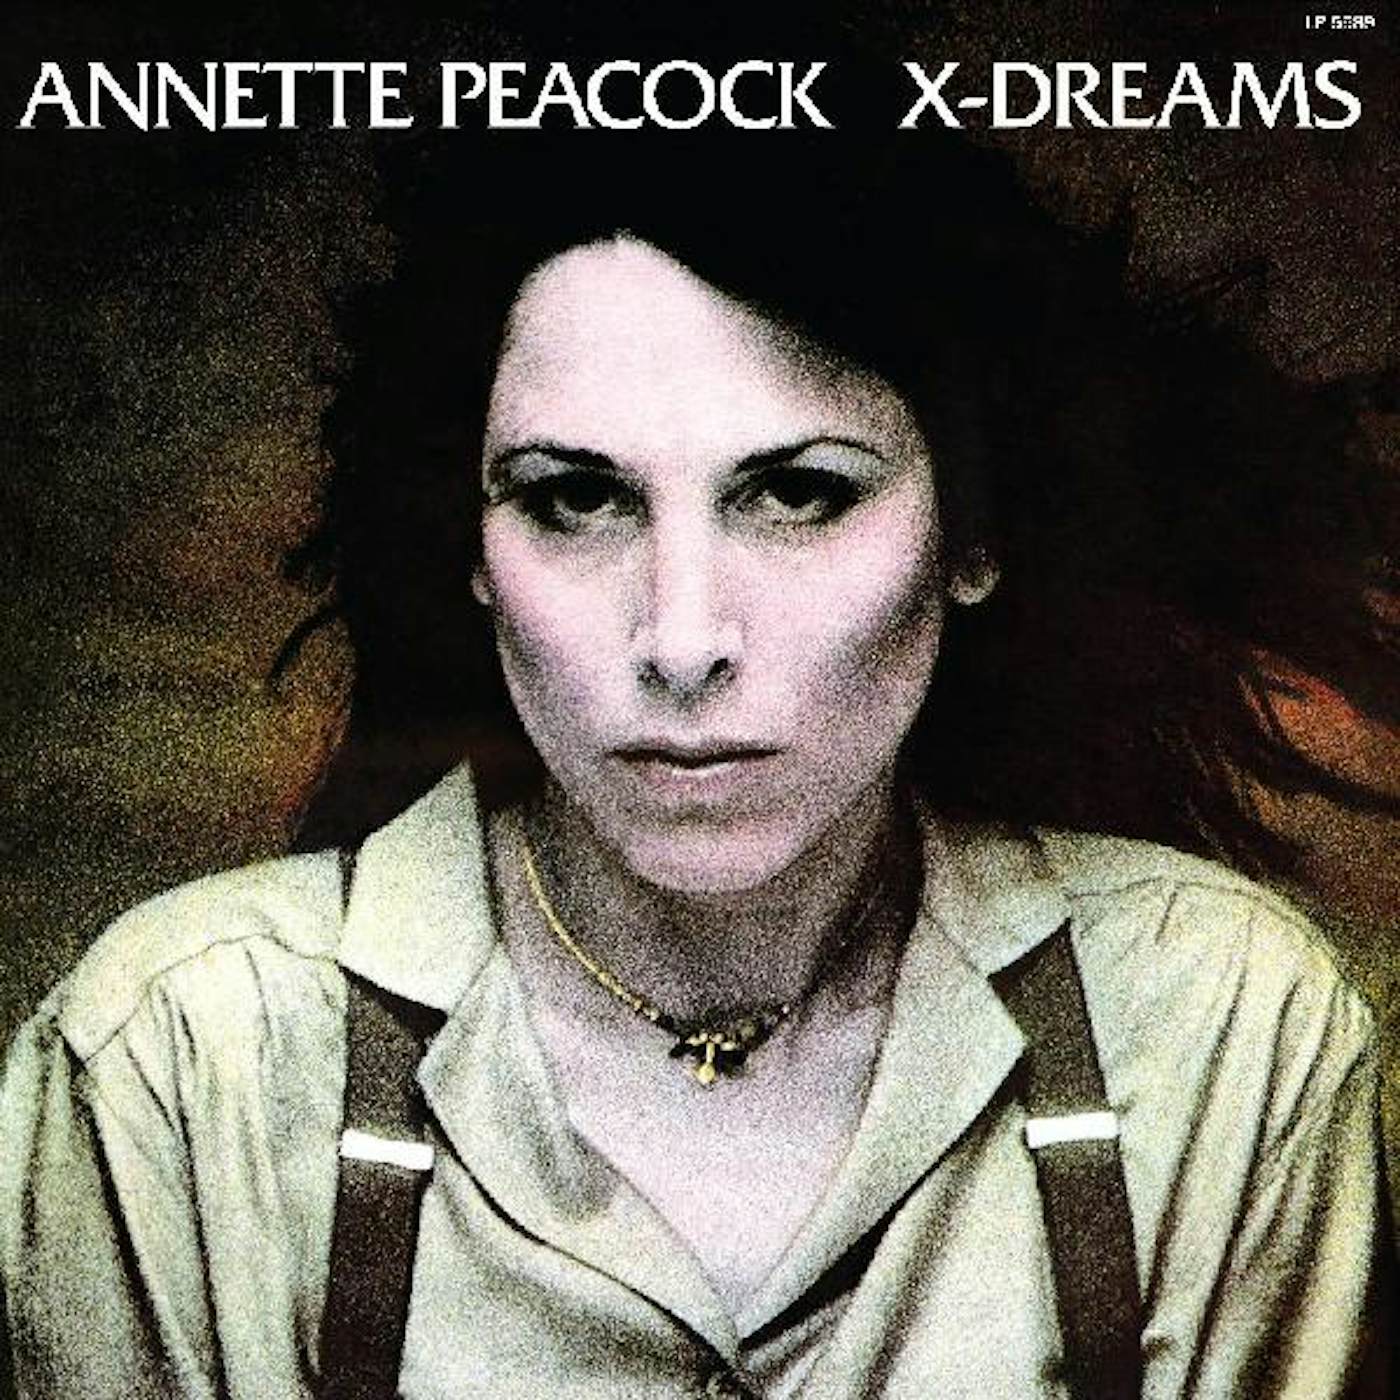 Annette Peacock X Dreams (Gold Vinyl) Vinyl Record